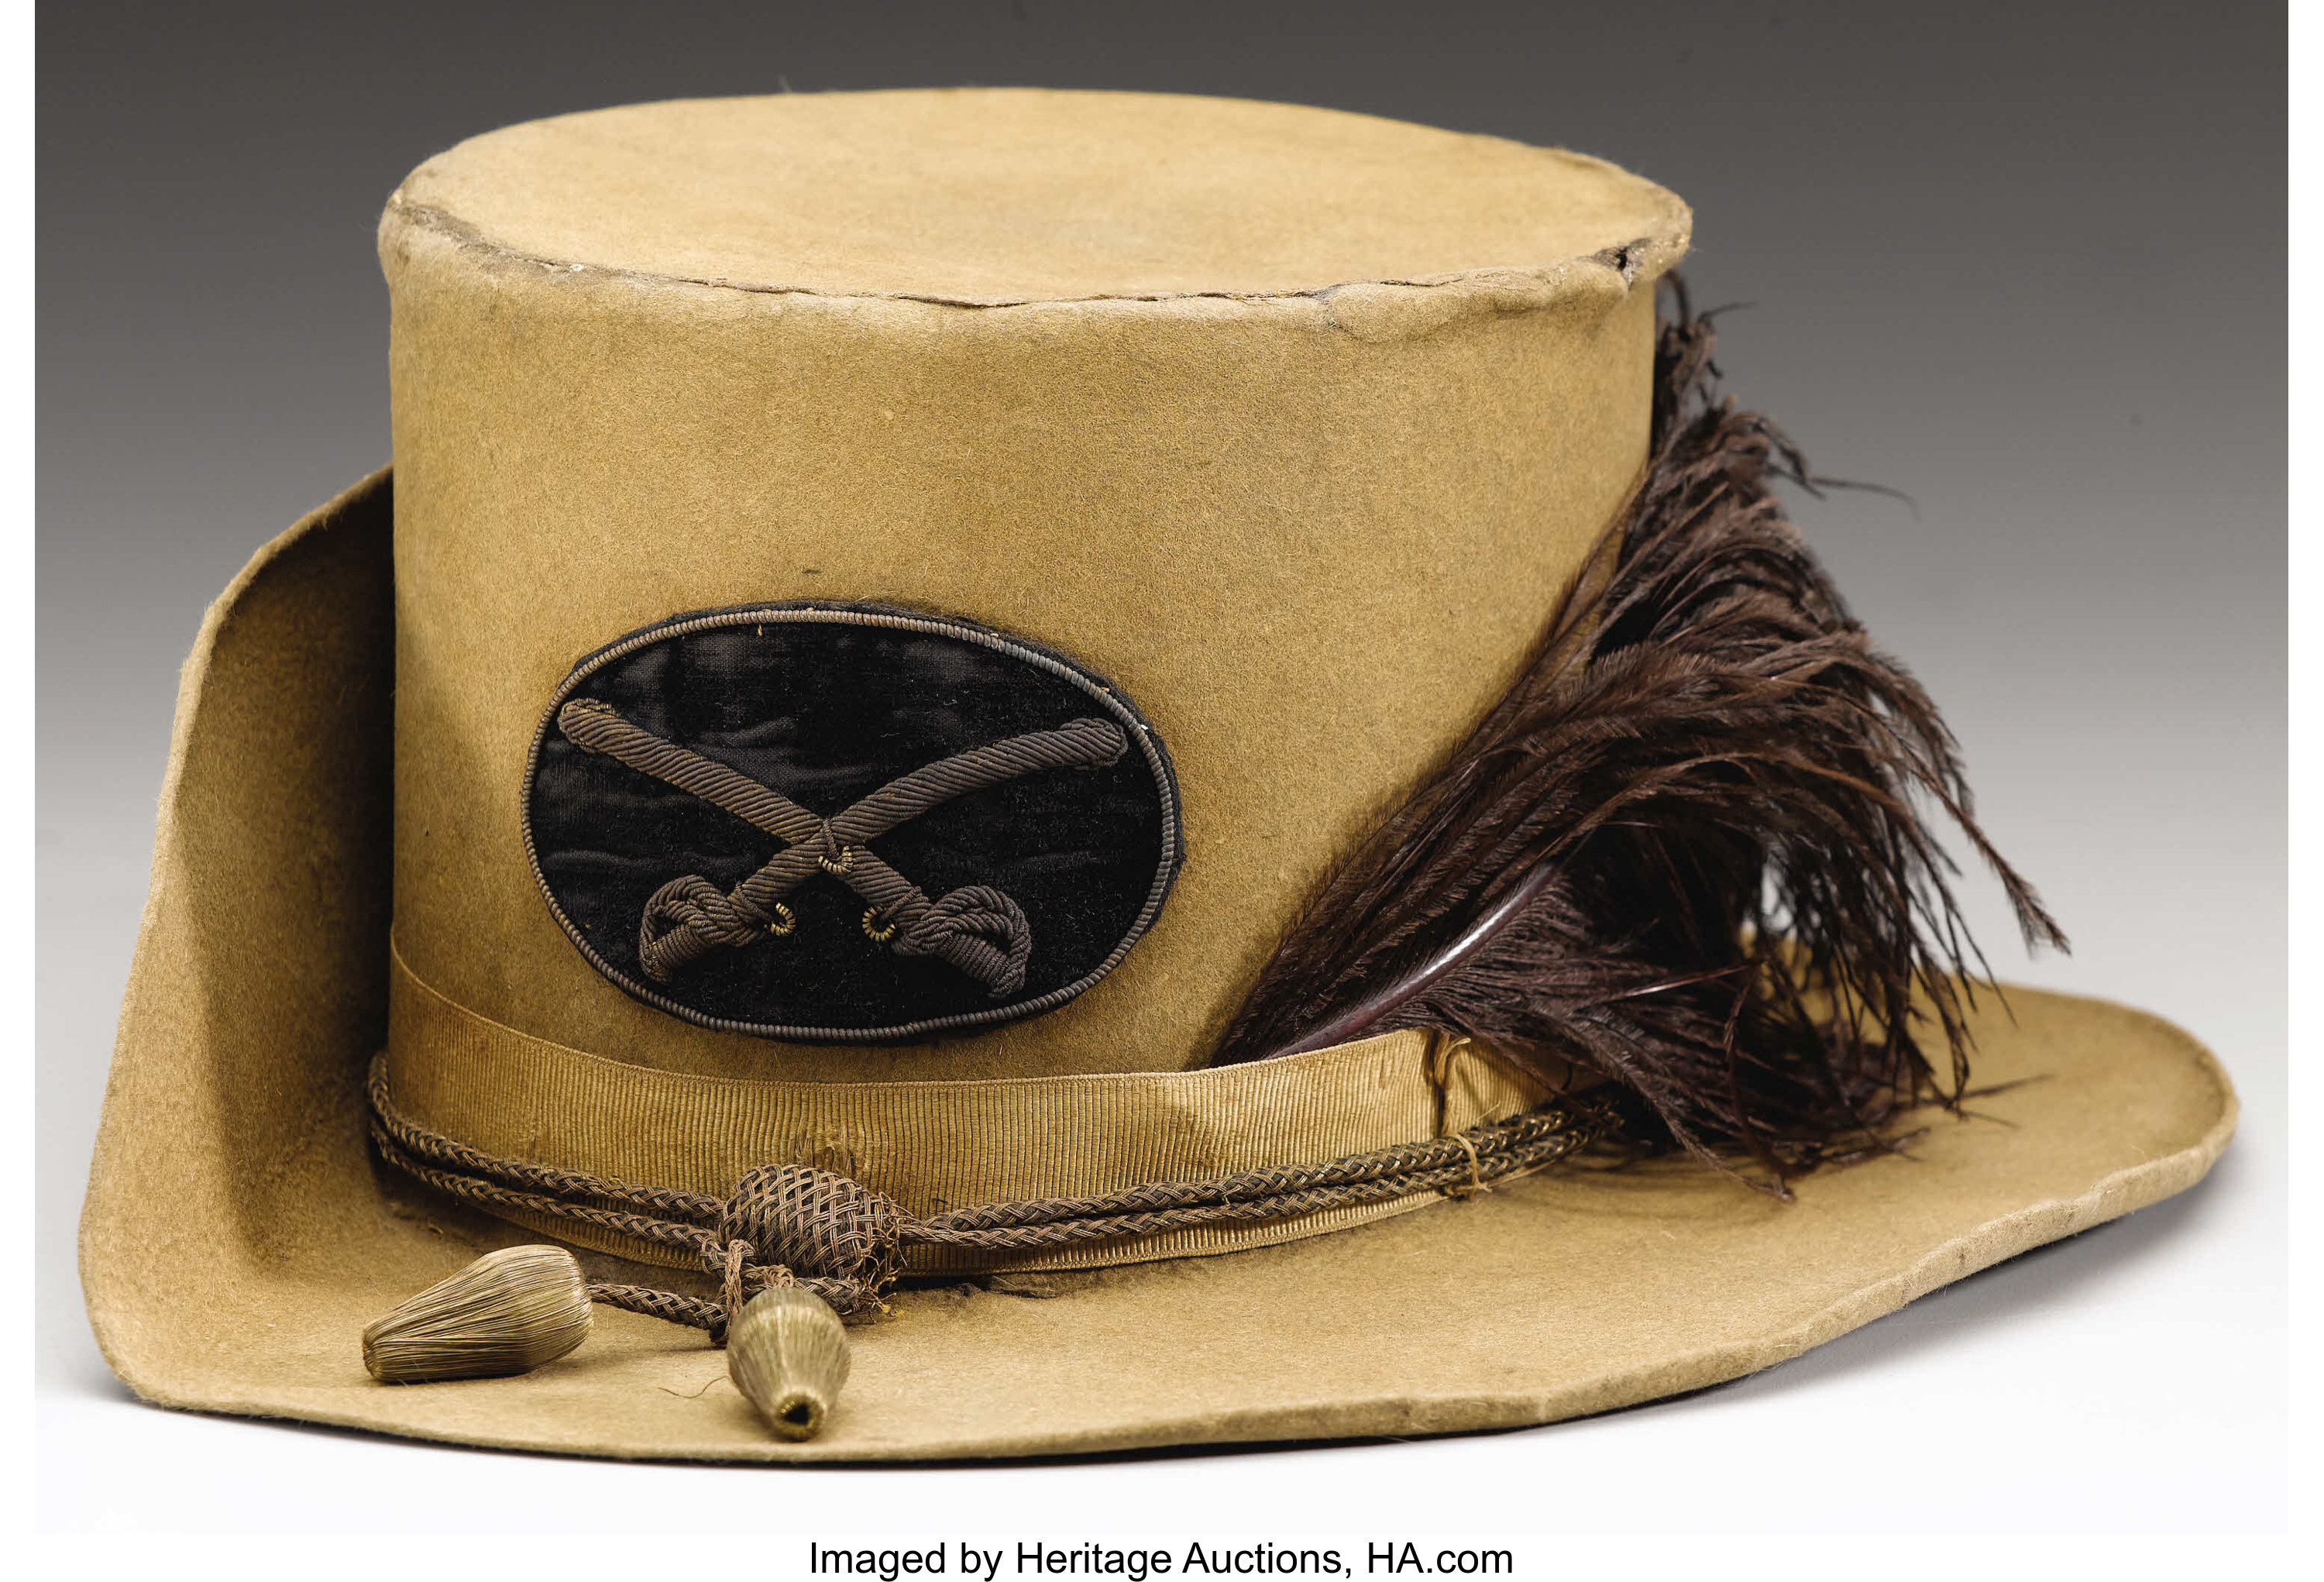 Шляпа поэта. Боливар шляпа 19 век. Боливар это широкополая шляпа.